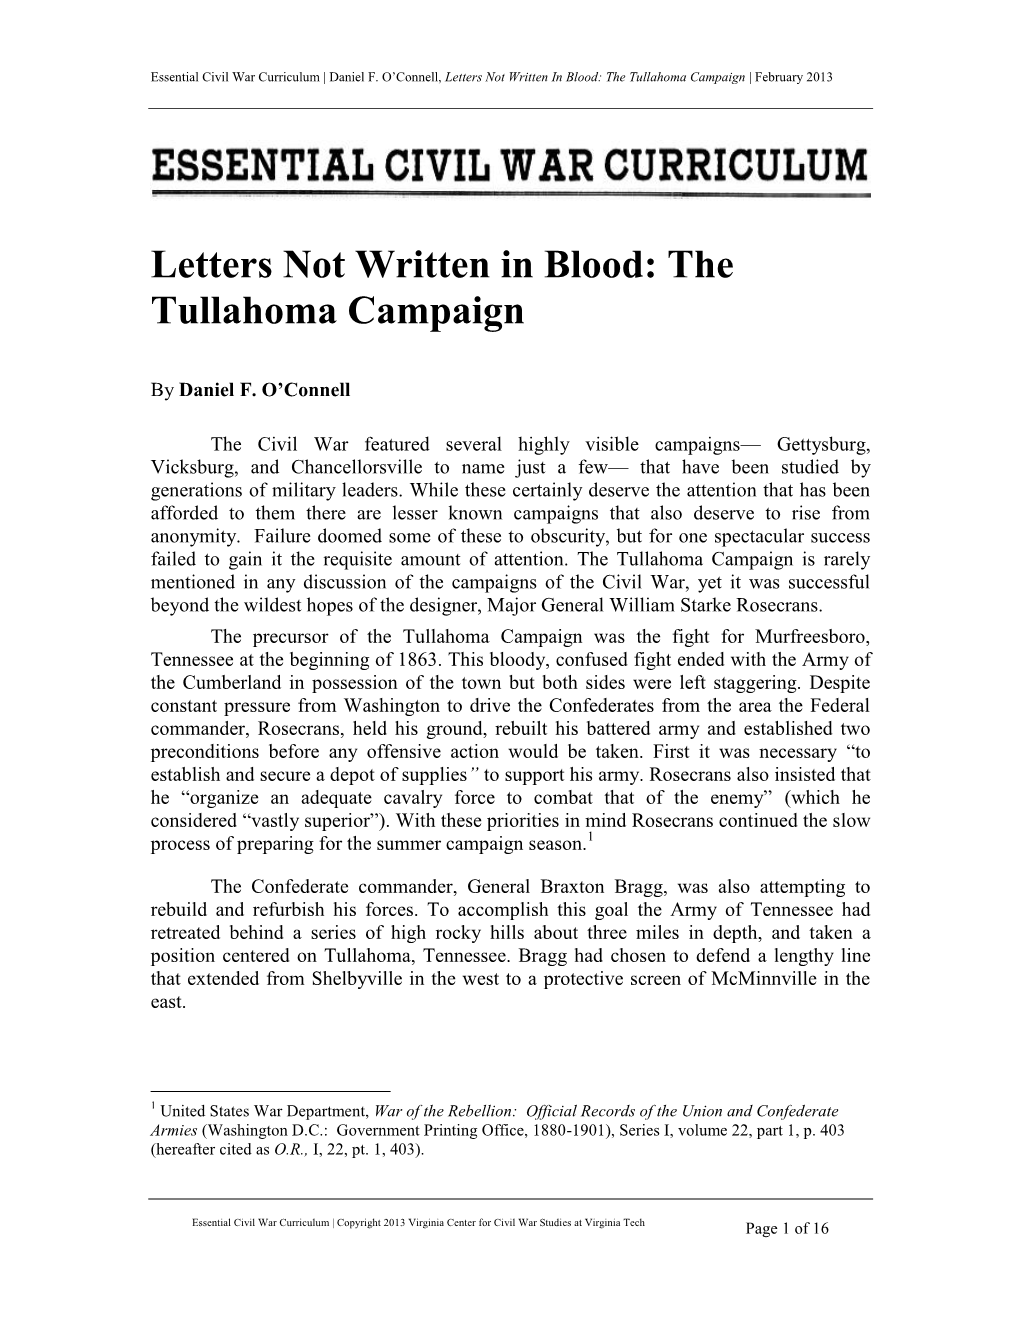 The Tullahoma Campaign | February 2013